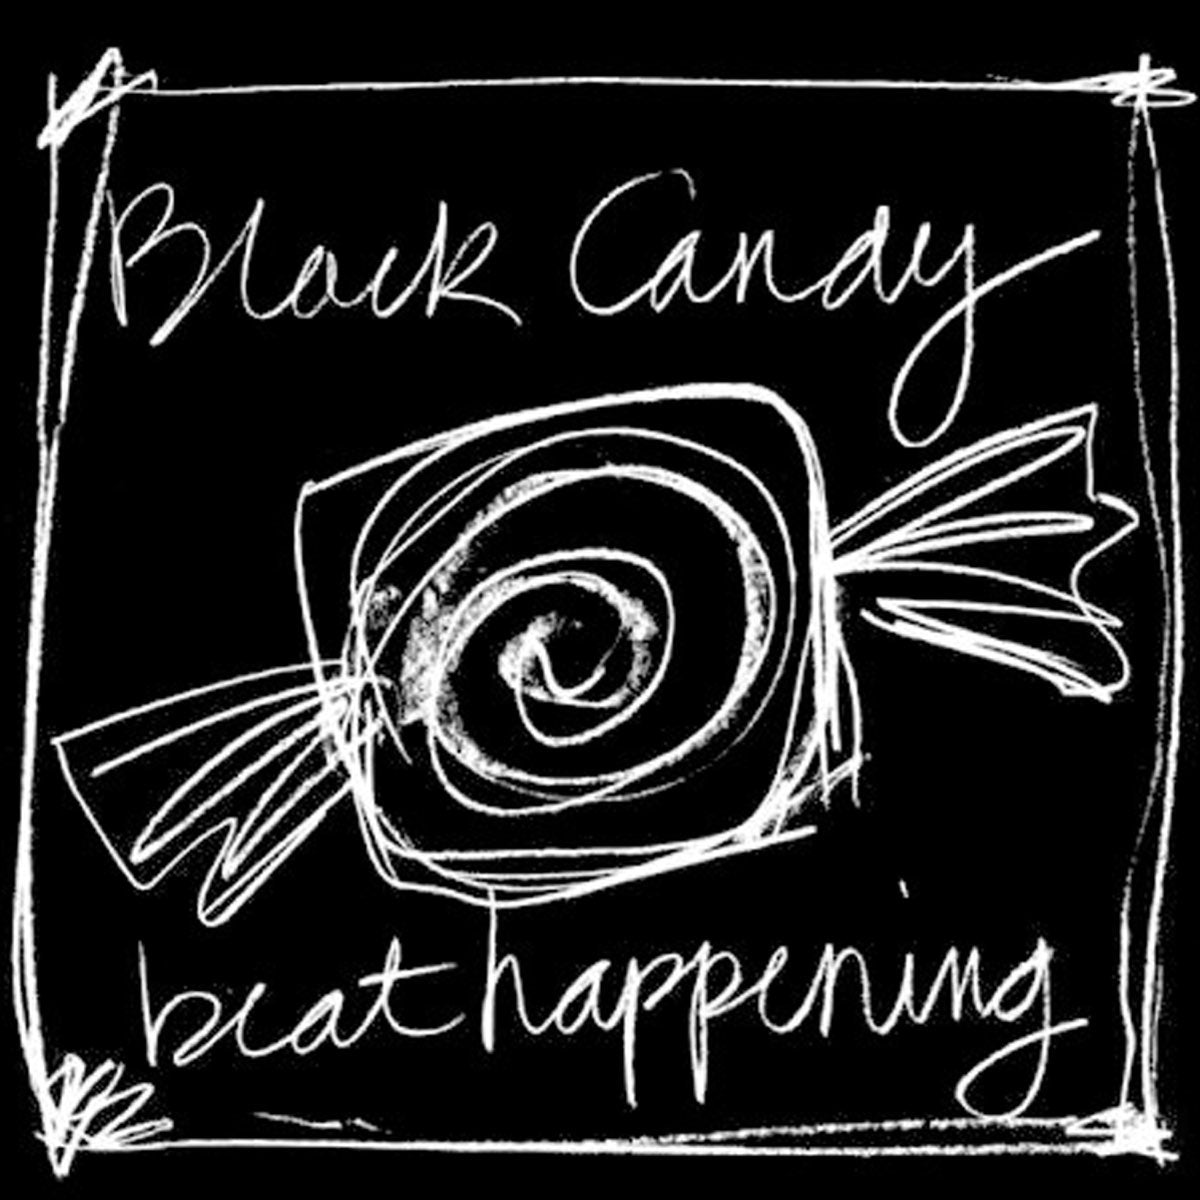 Beat Happening: Black Candy (Vinyl LP)